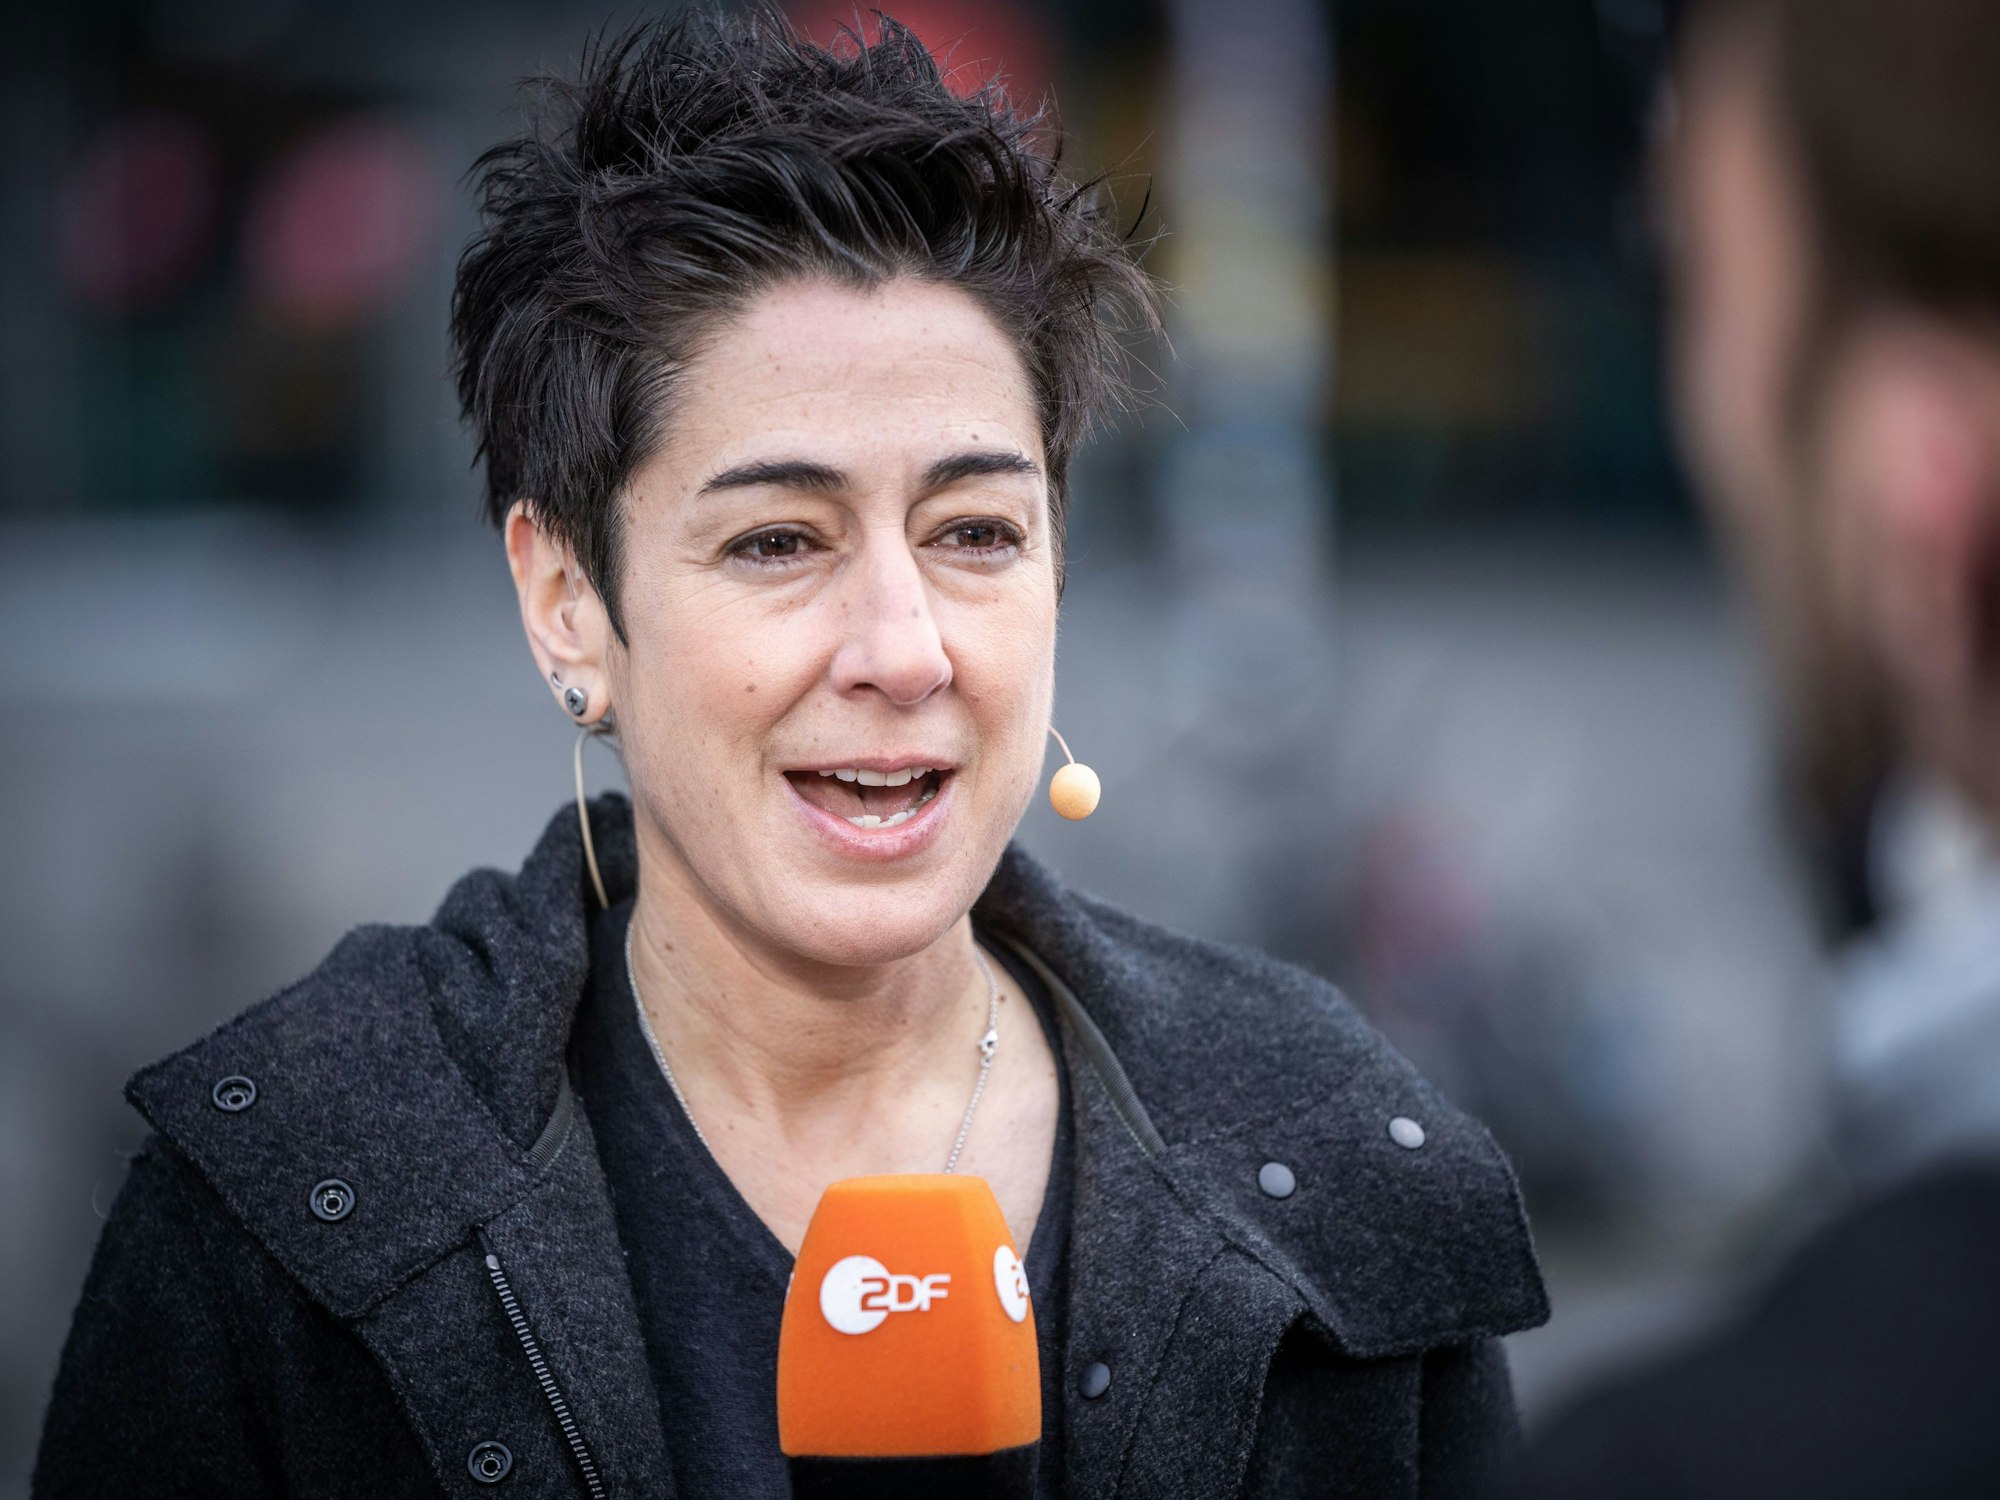 Moderatorin Dunja Hayali ist beim ZDF-"Morgenmagazin" vor Ort am Berliner Hauptbahnhof.